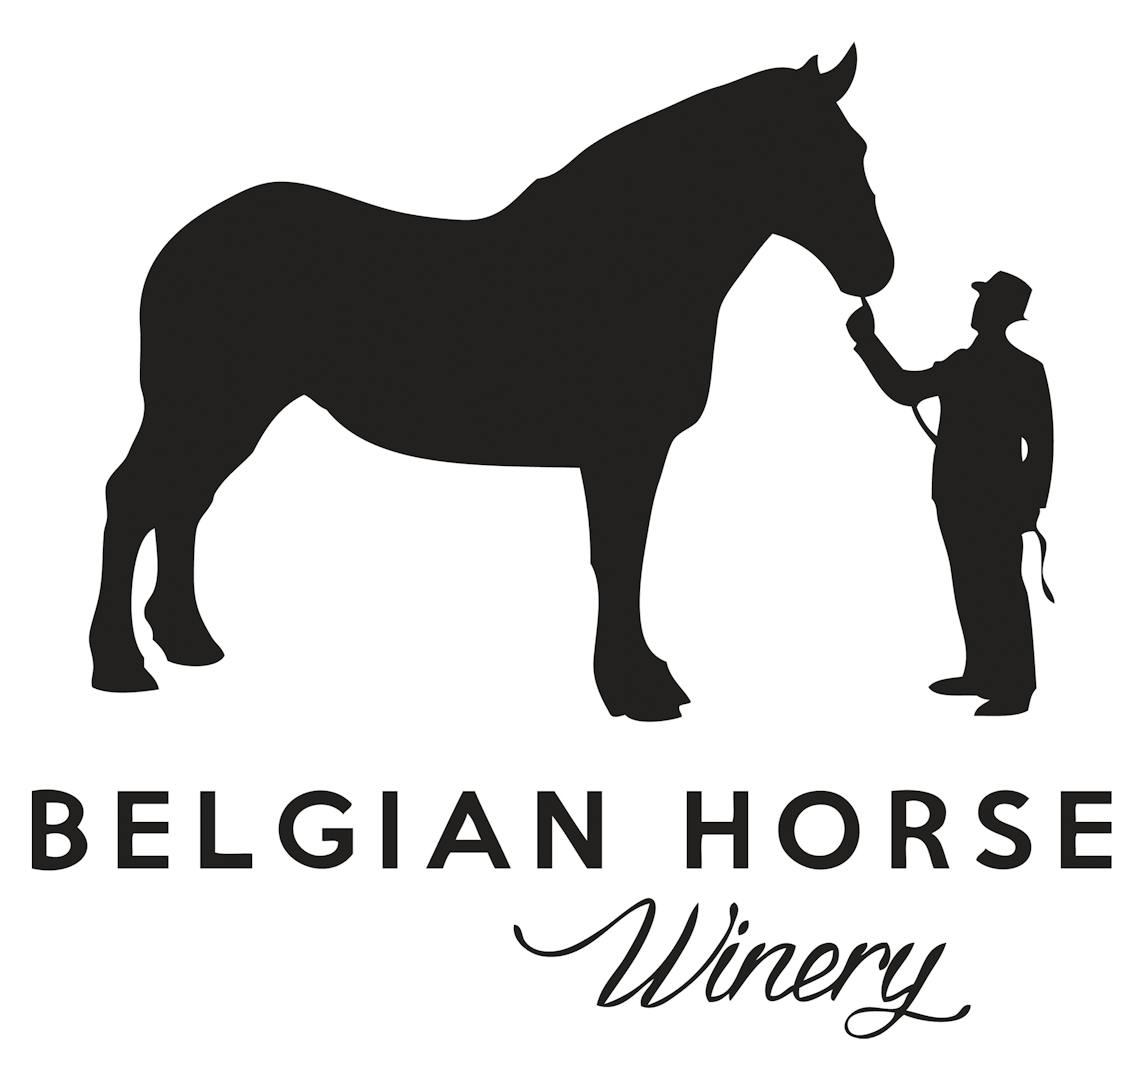 BELGIAN HORSE WINERY